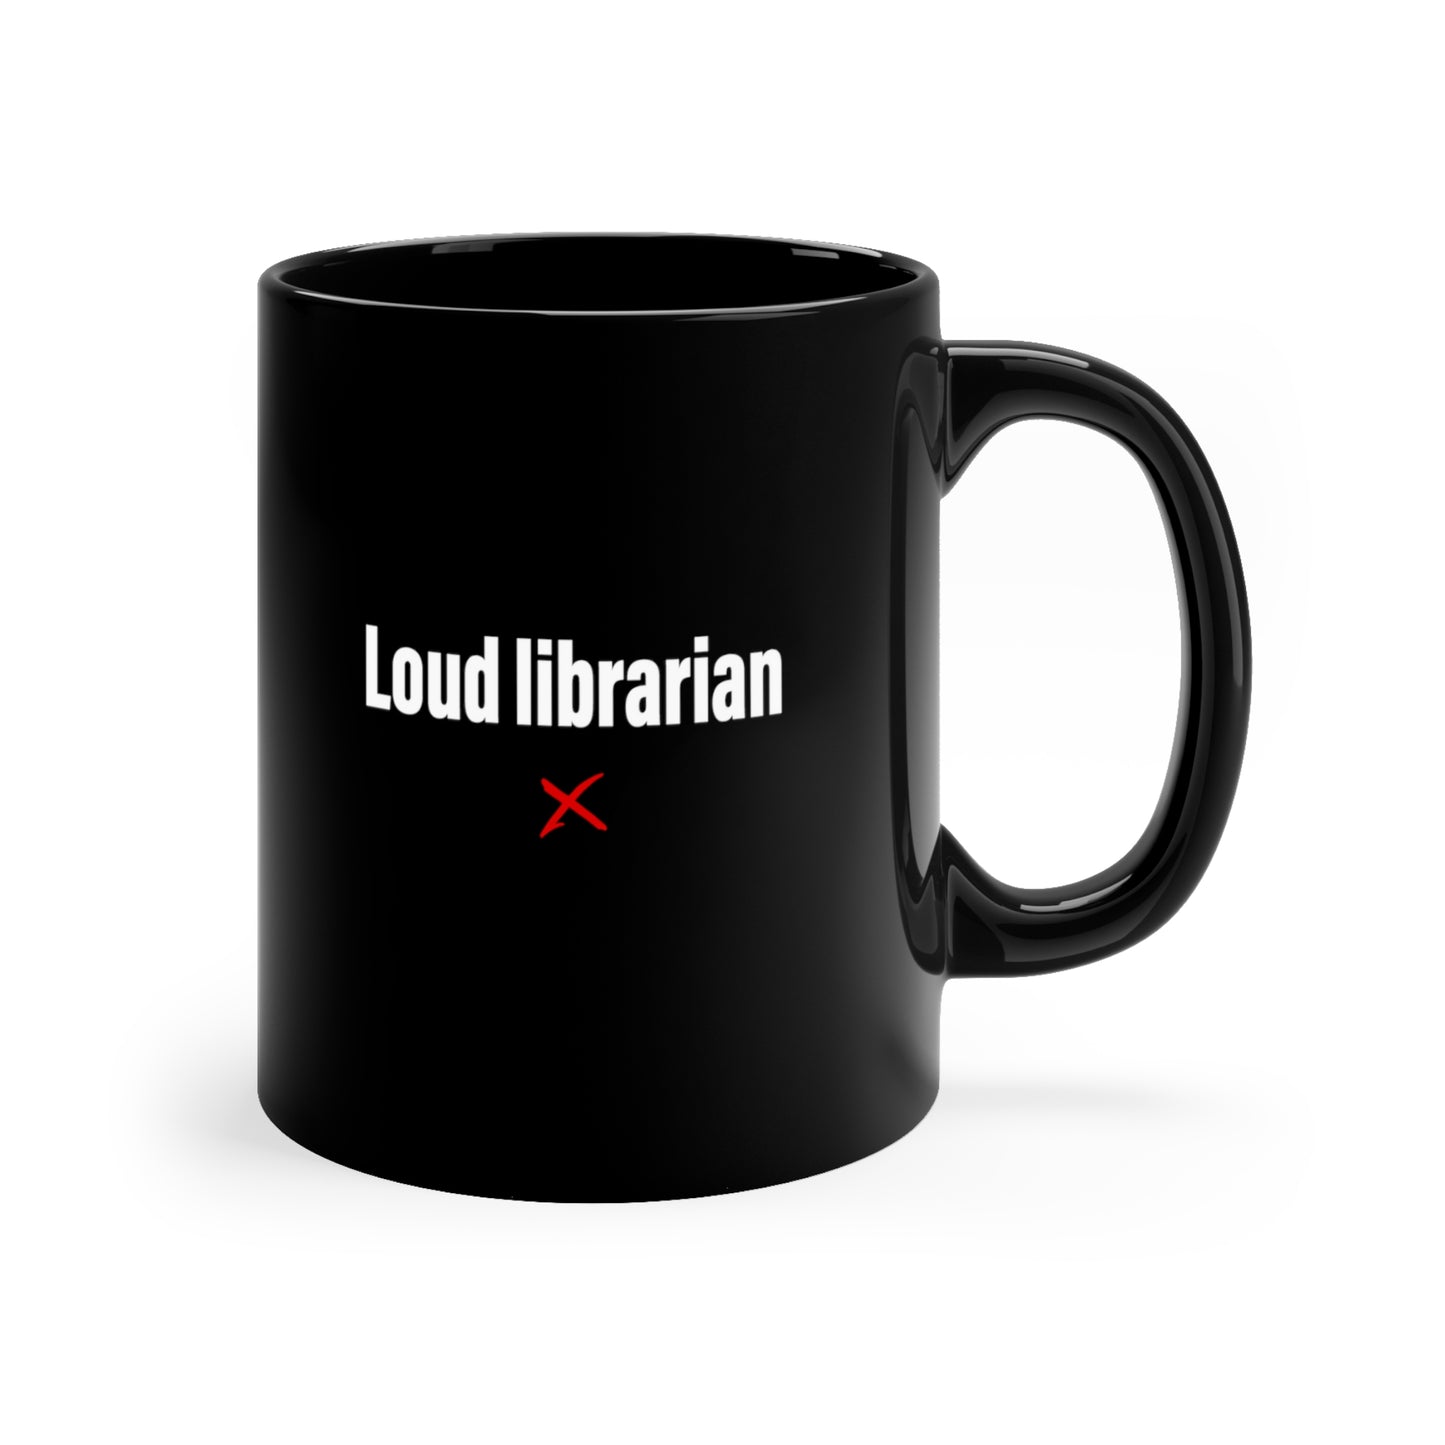 Loud librarian - Mug